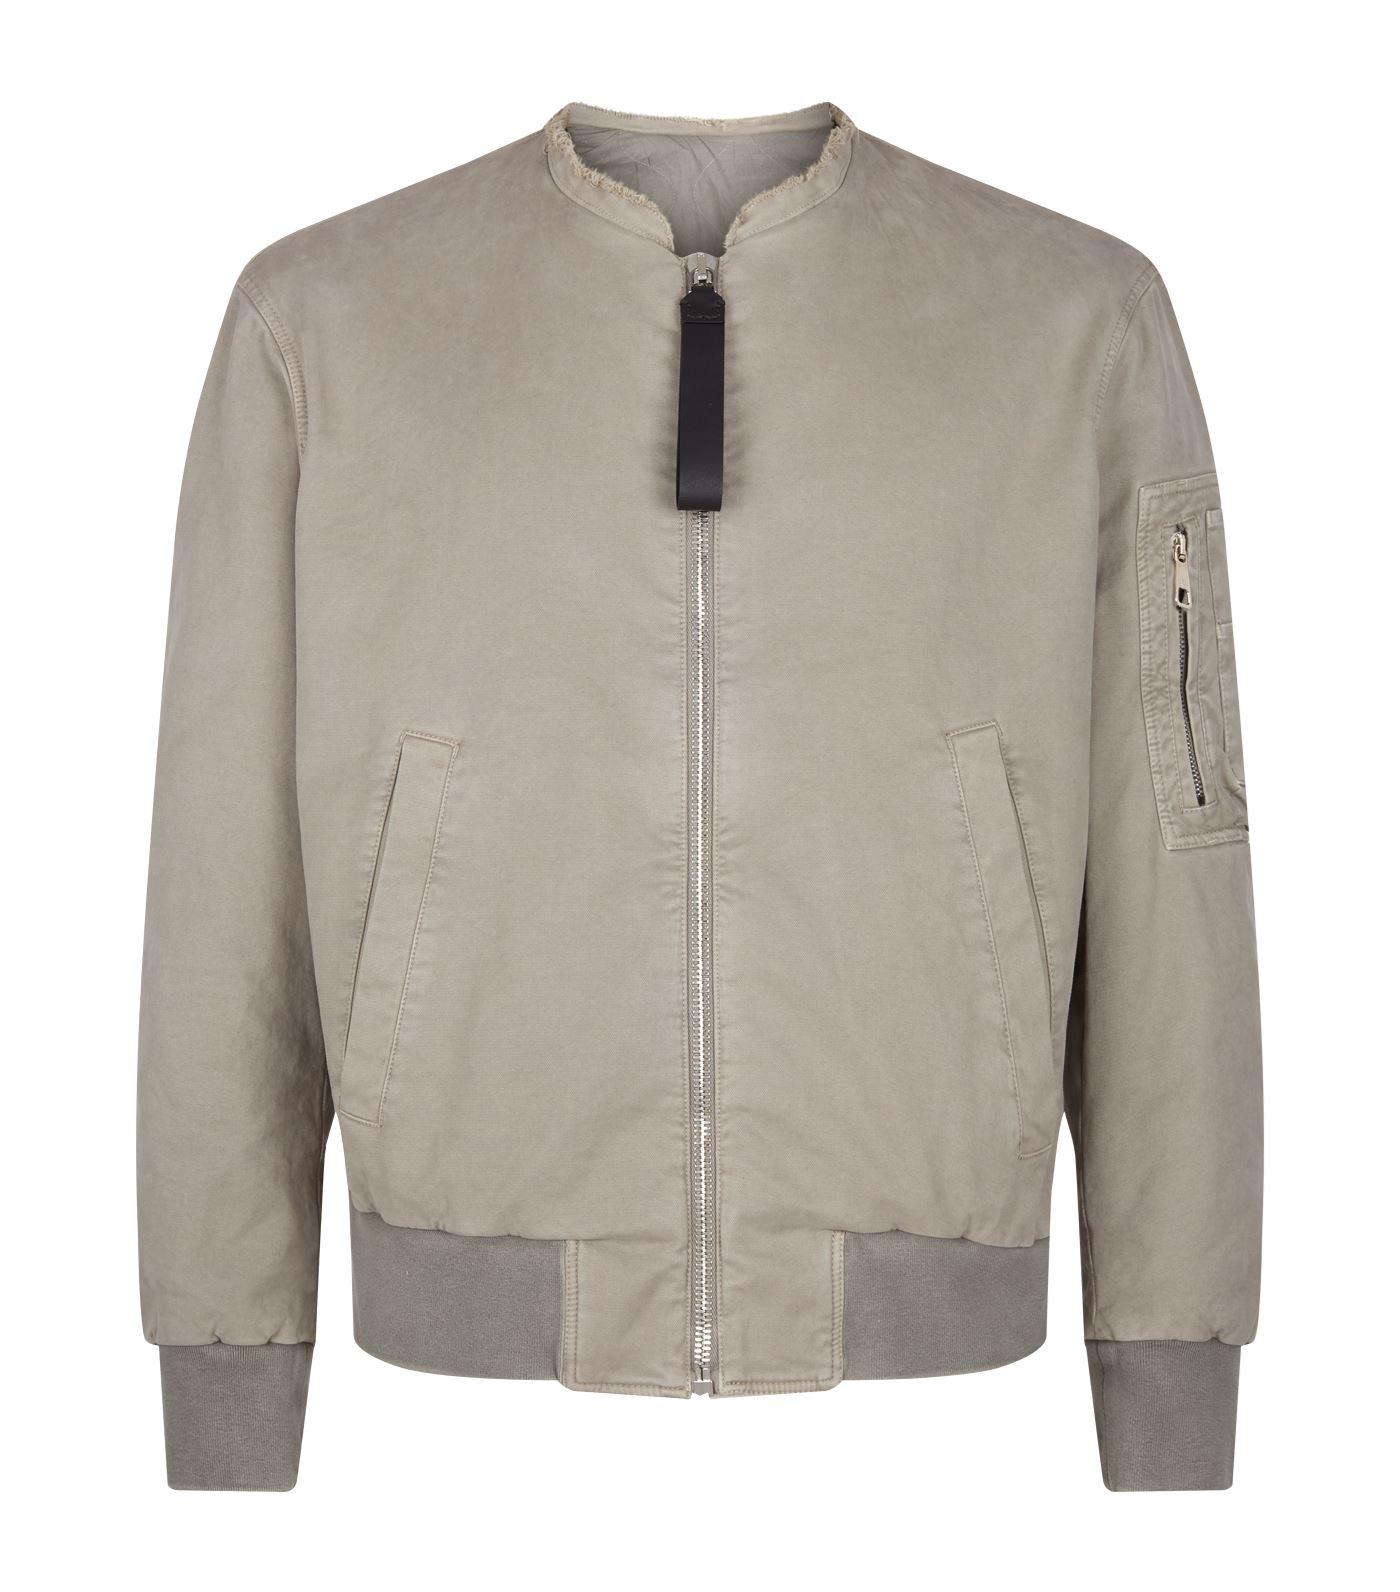 Neil Barrett Cotton Frayed Neckline Jacket in Grey (Gray) for Men - Lyst